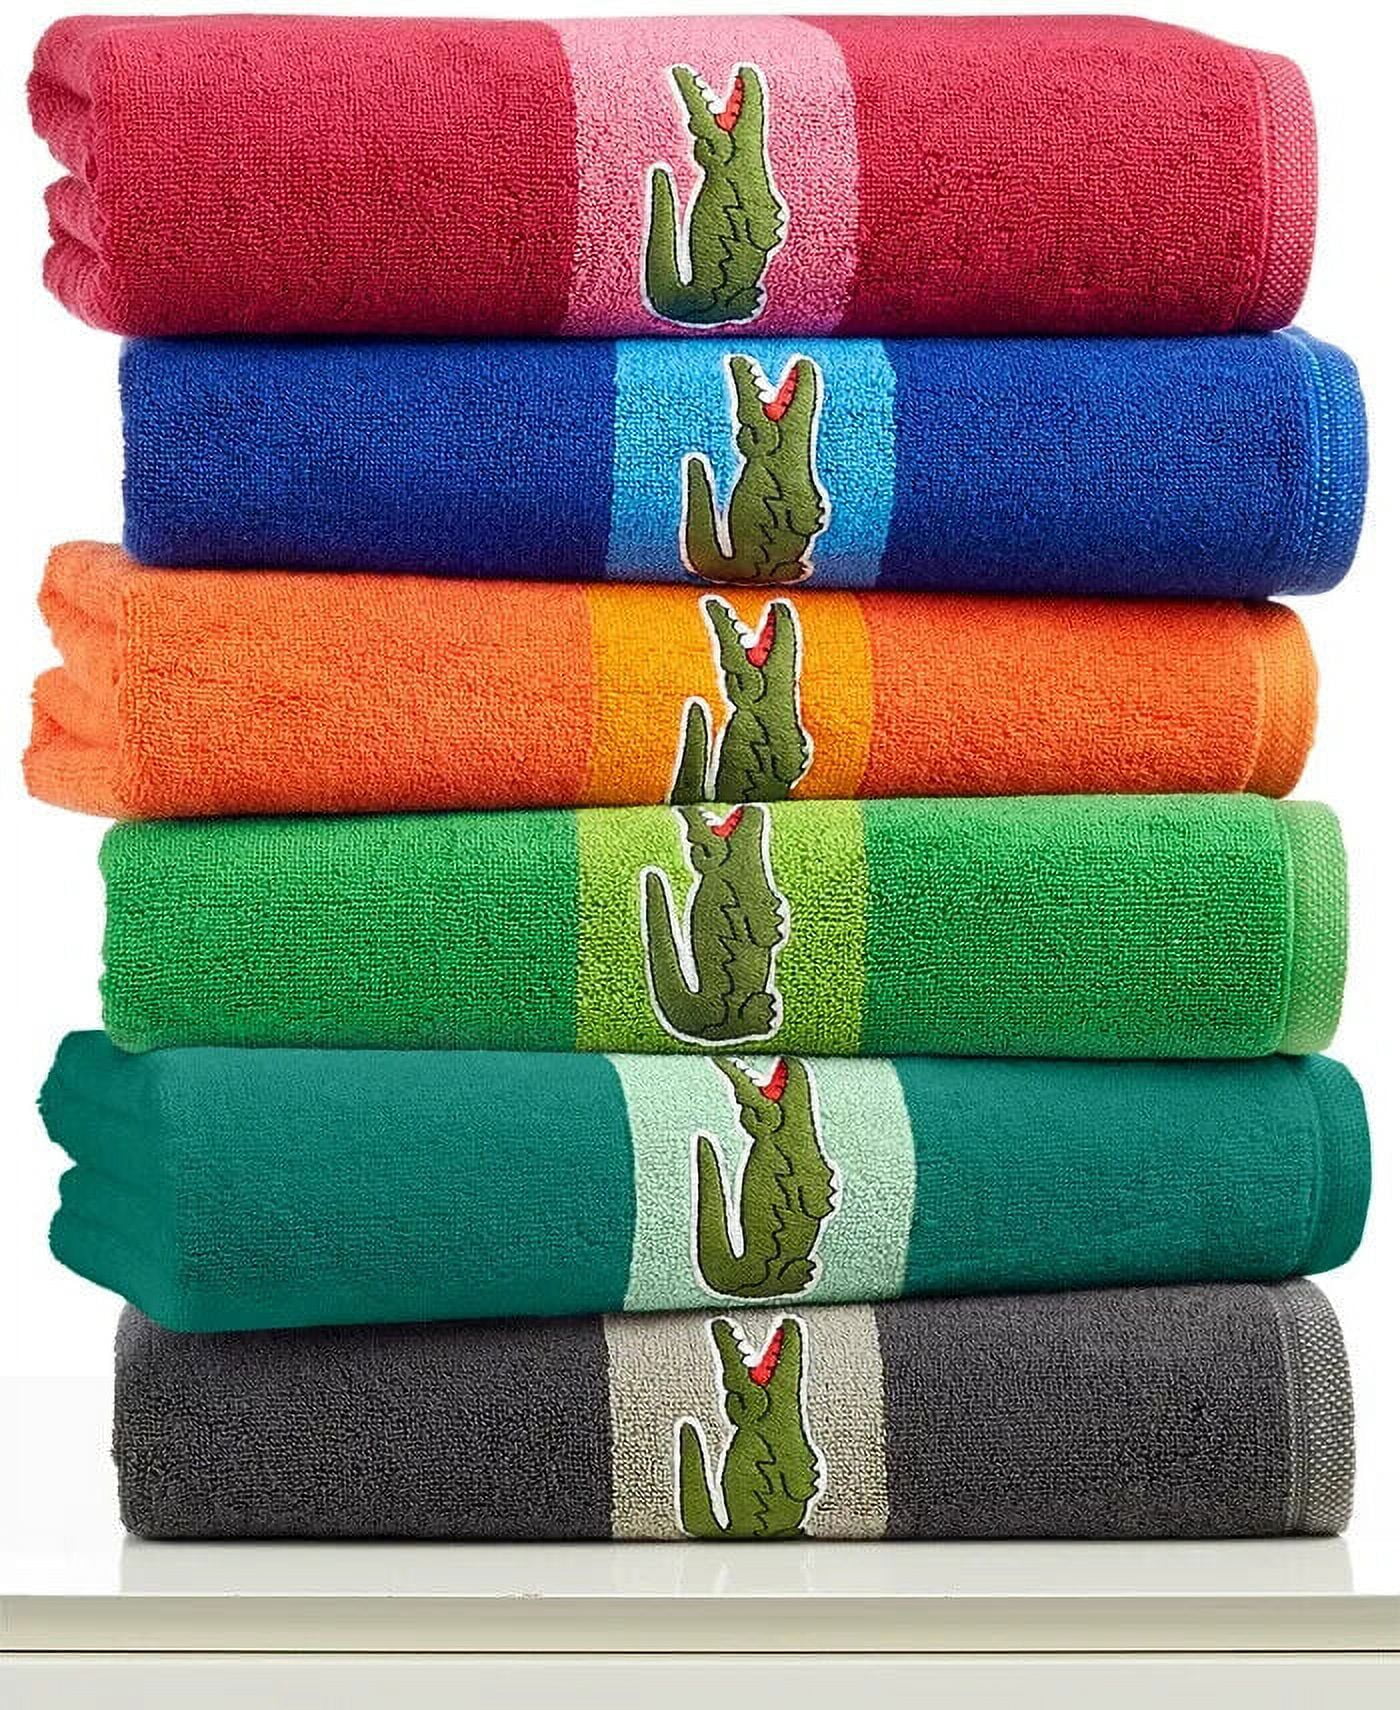 LACOSTE SIGNATURE LOGO Bath Towel White And Gray Crocodile Logo